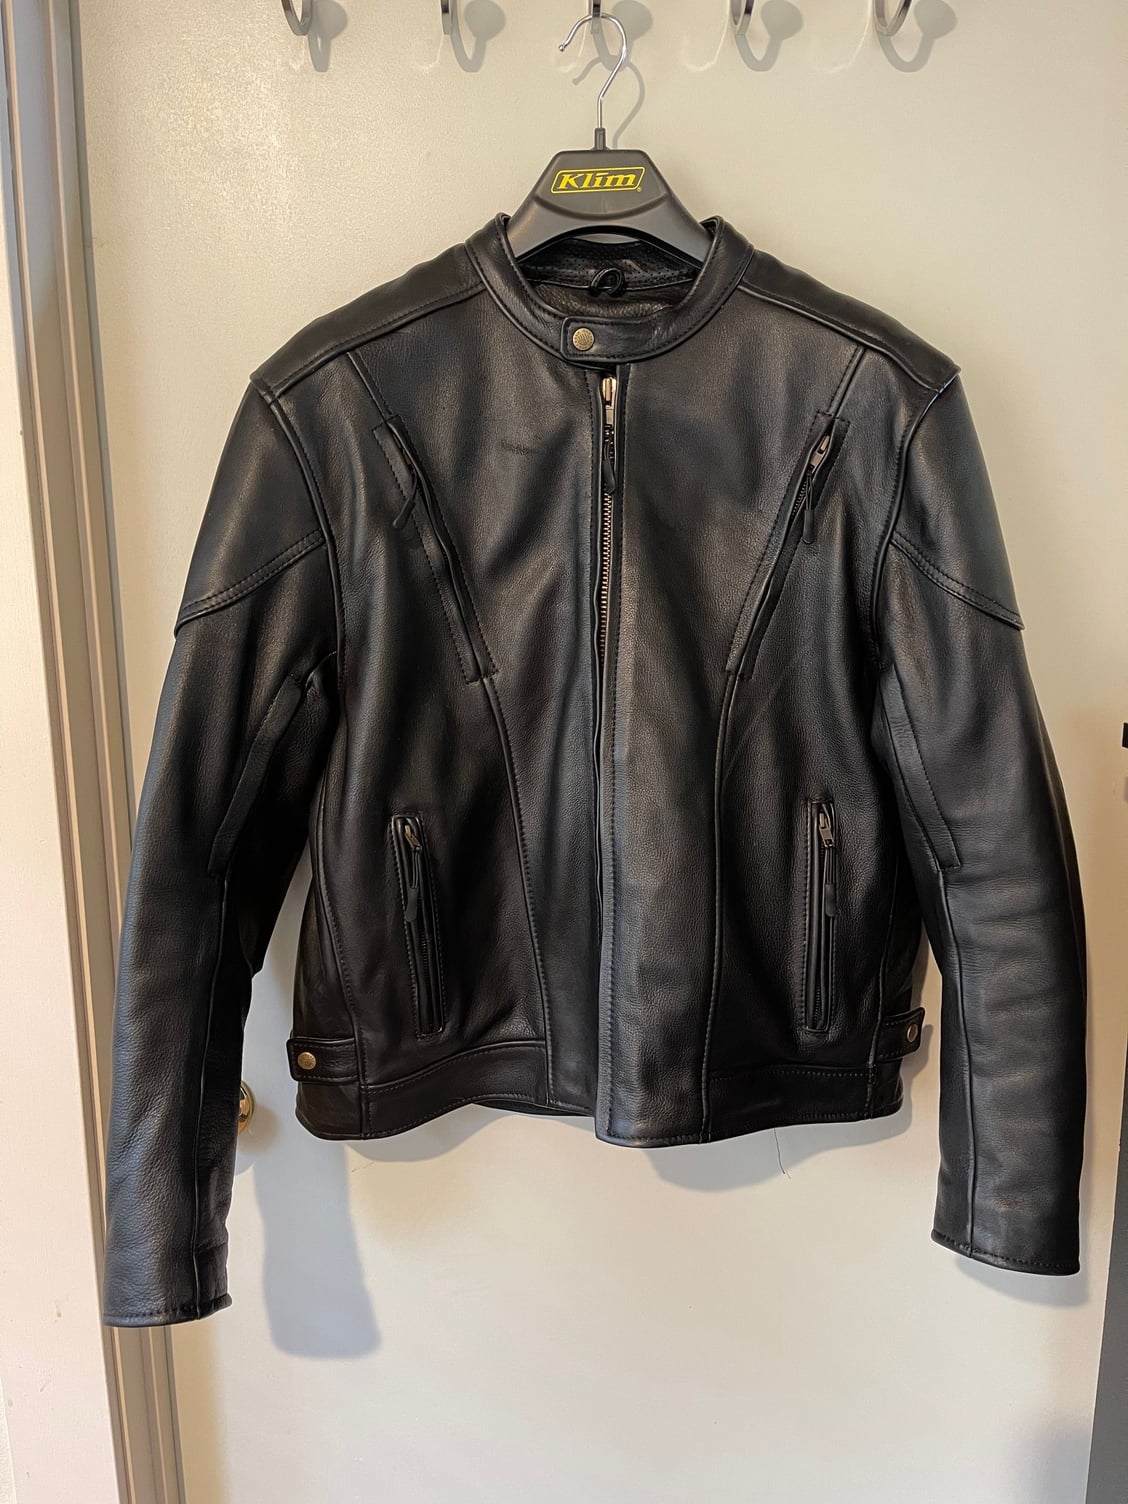 Fox Creek Leather Vented Racing Jacket - Harley Davidson Forums